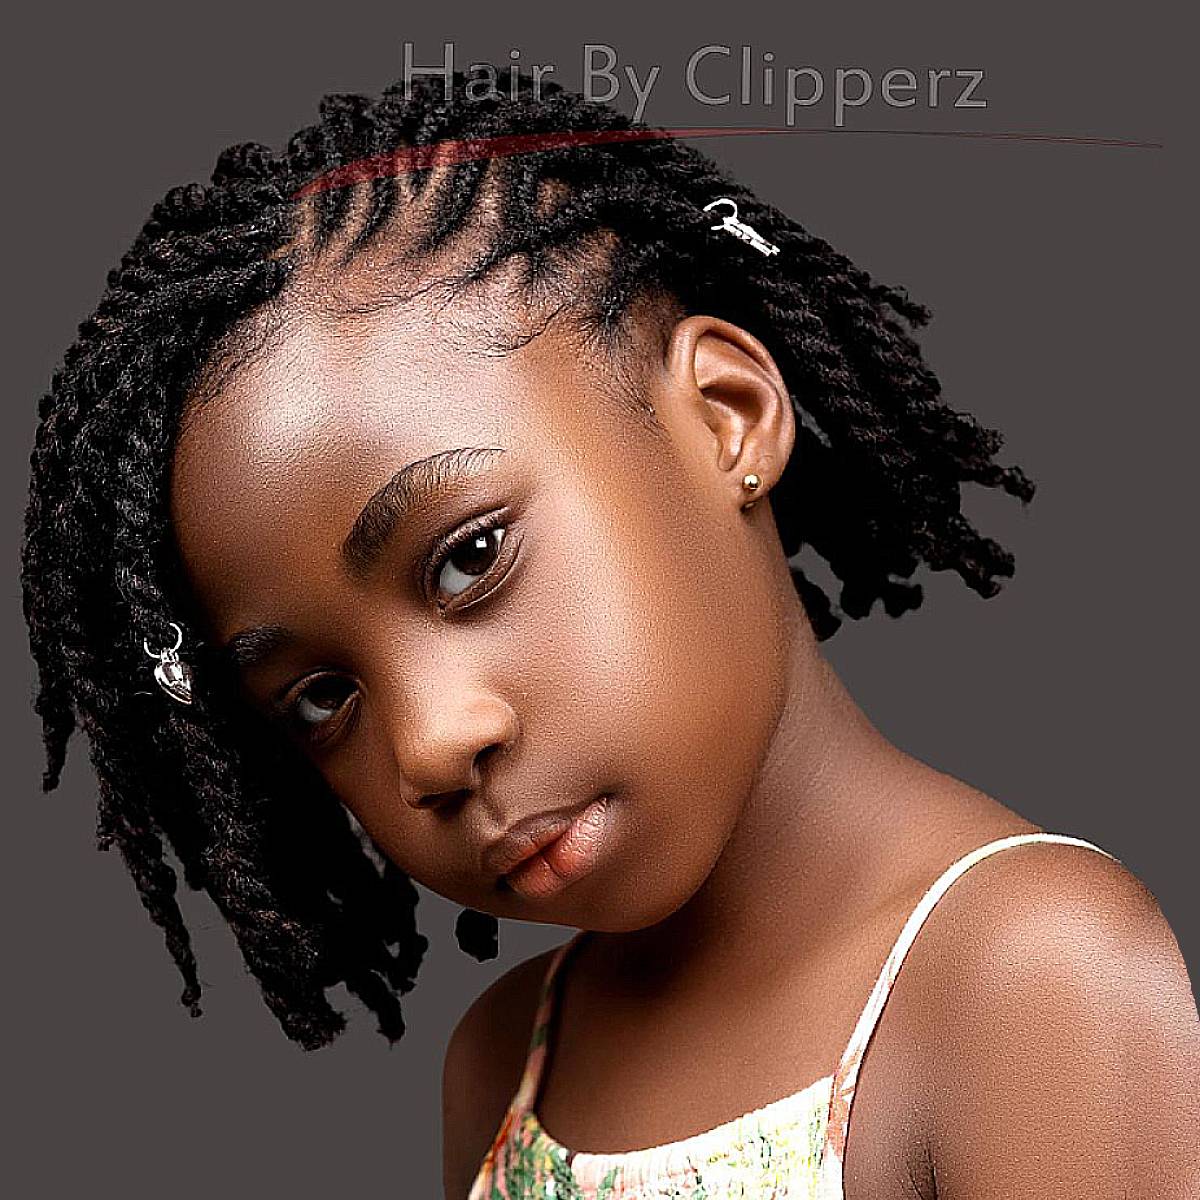 box braids styles for little girls